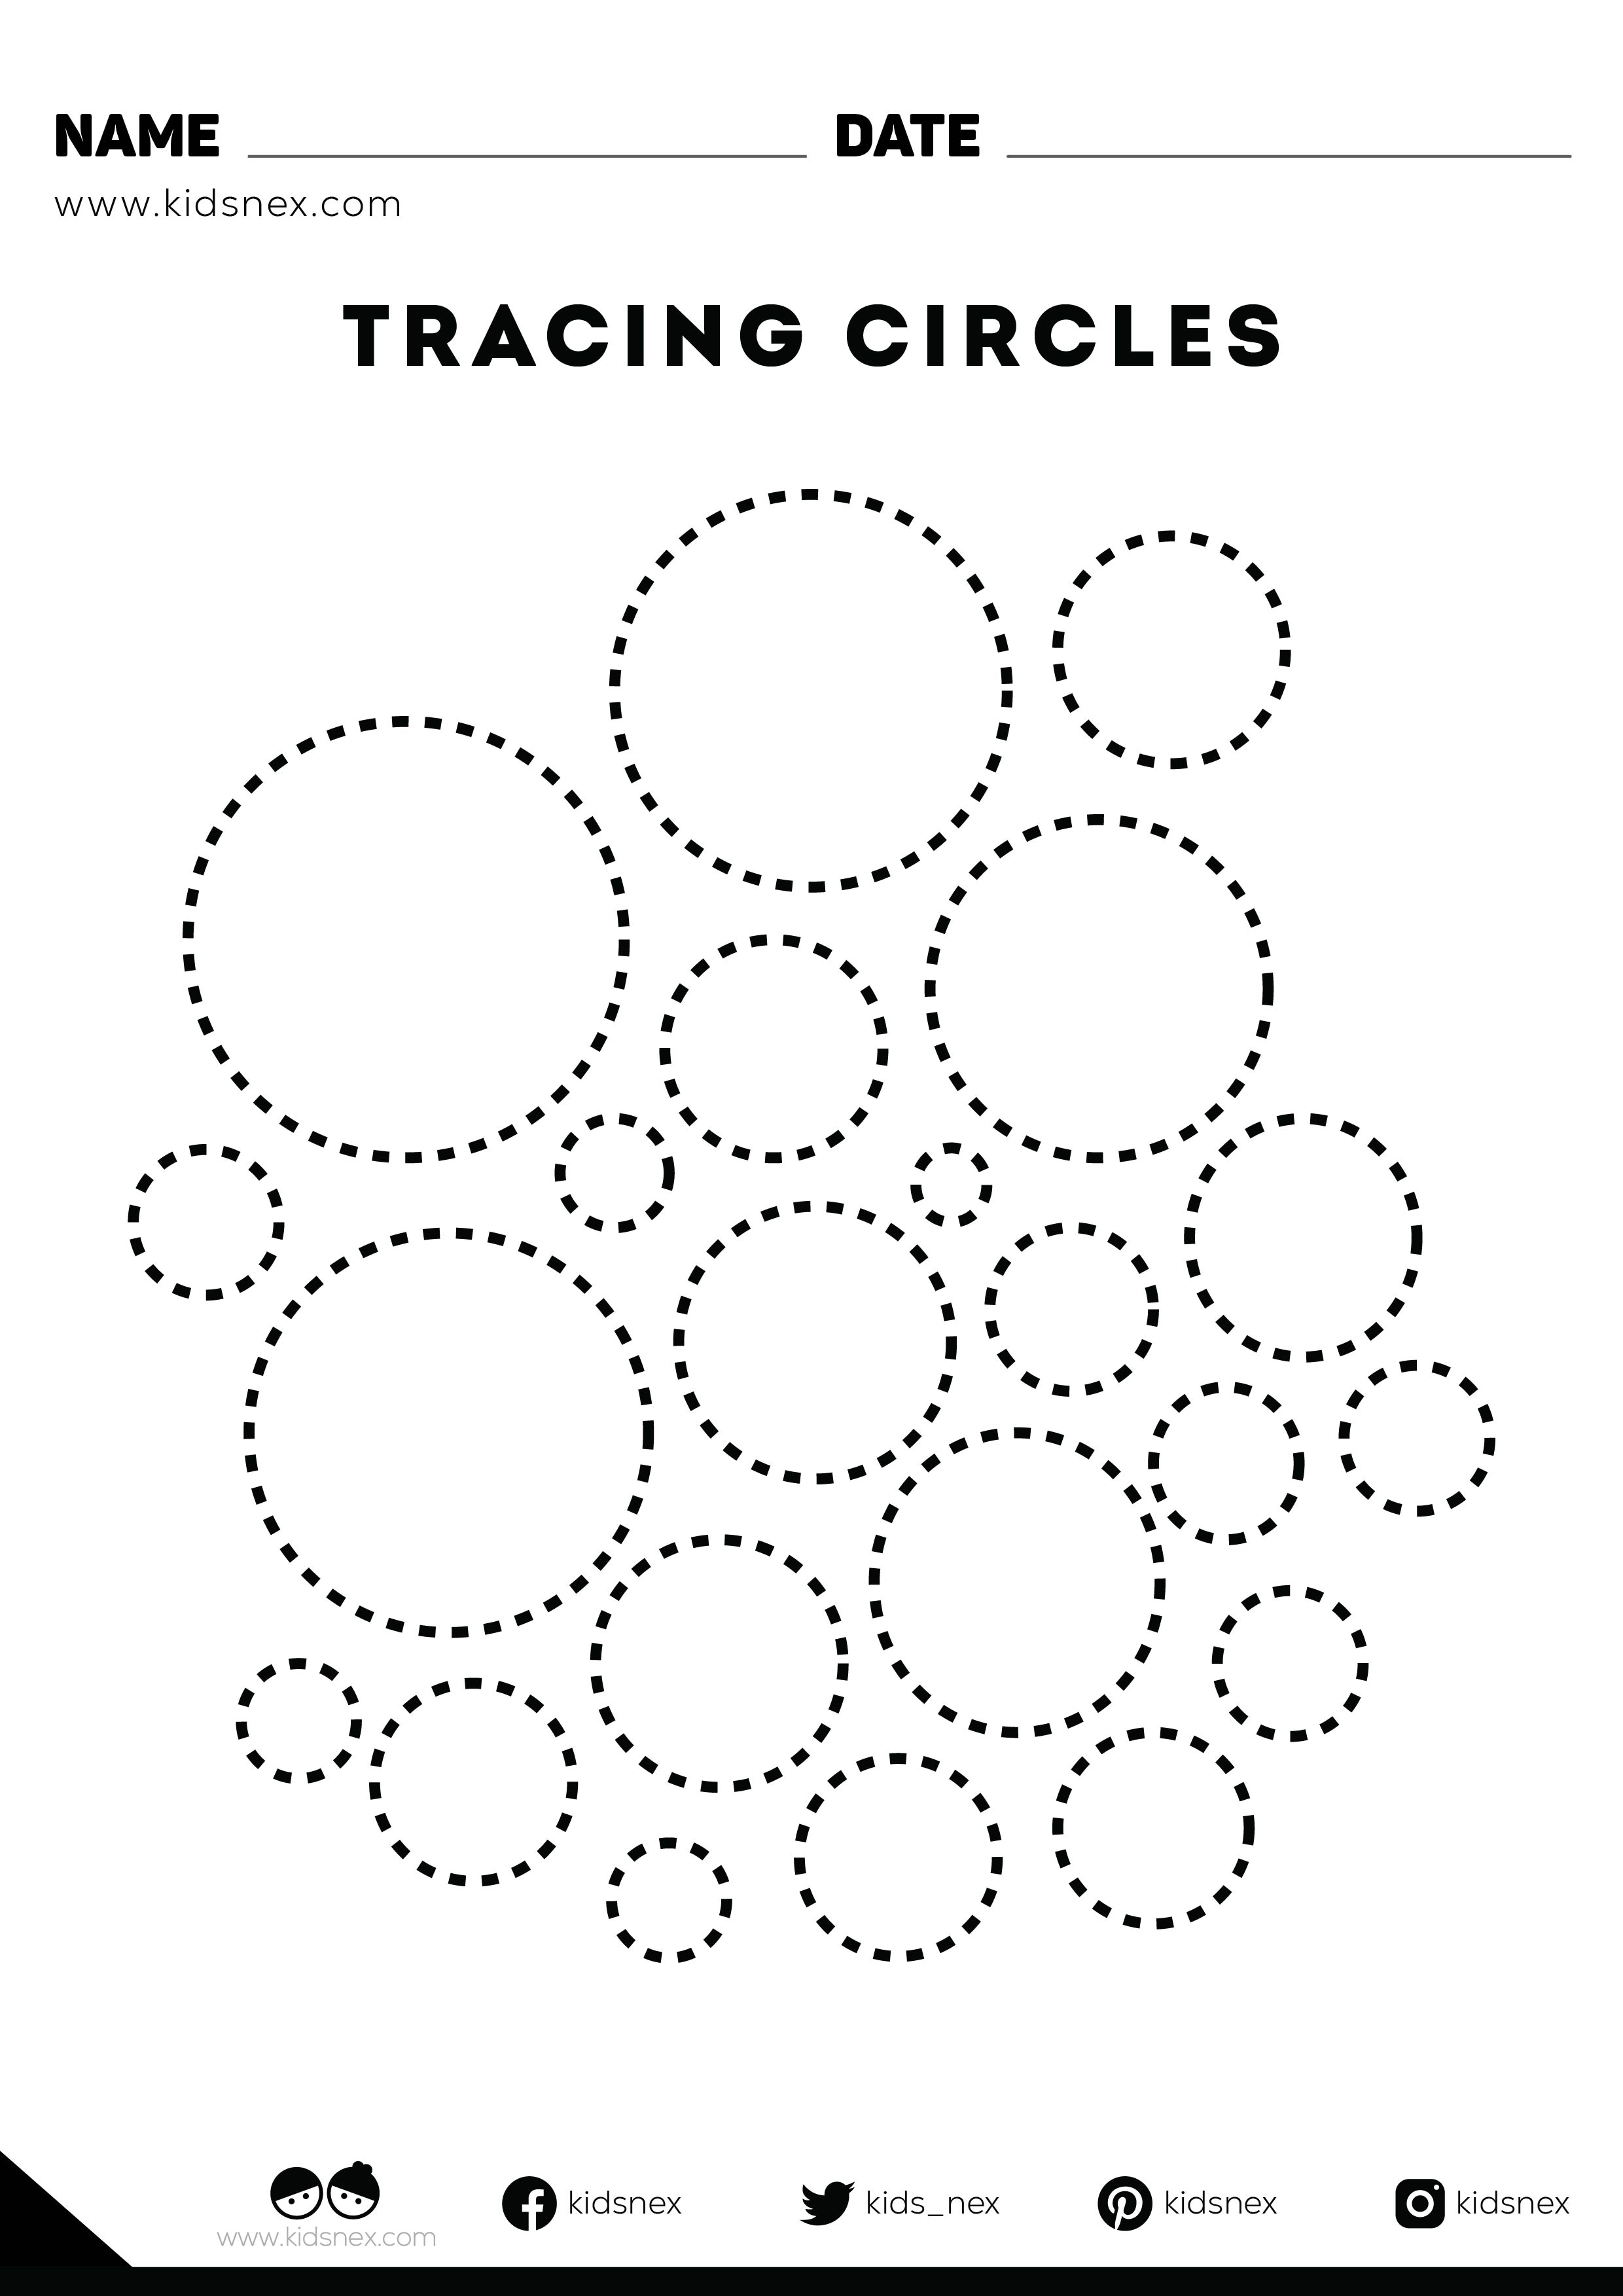 trace-circles-worksheet